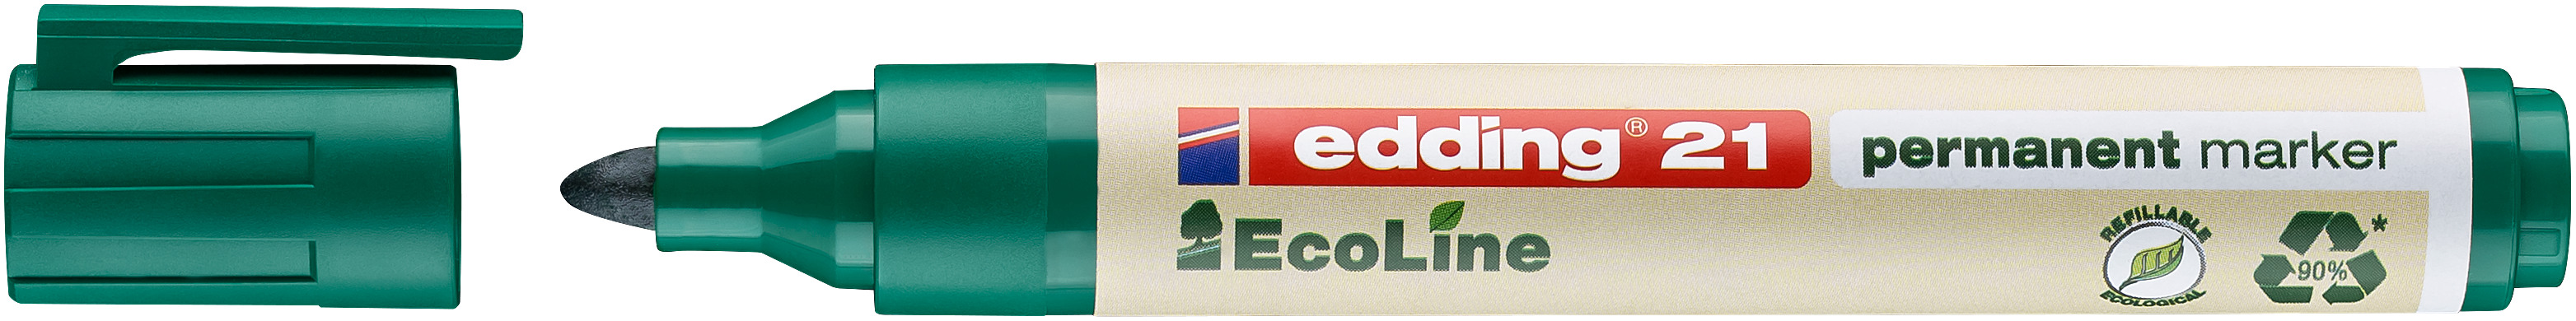 EDDING Permanent Marker 21 1.5-3mm 21-4 vert